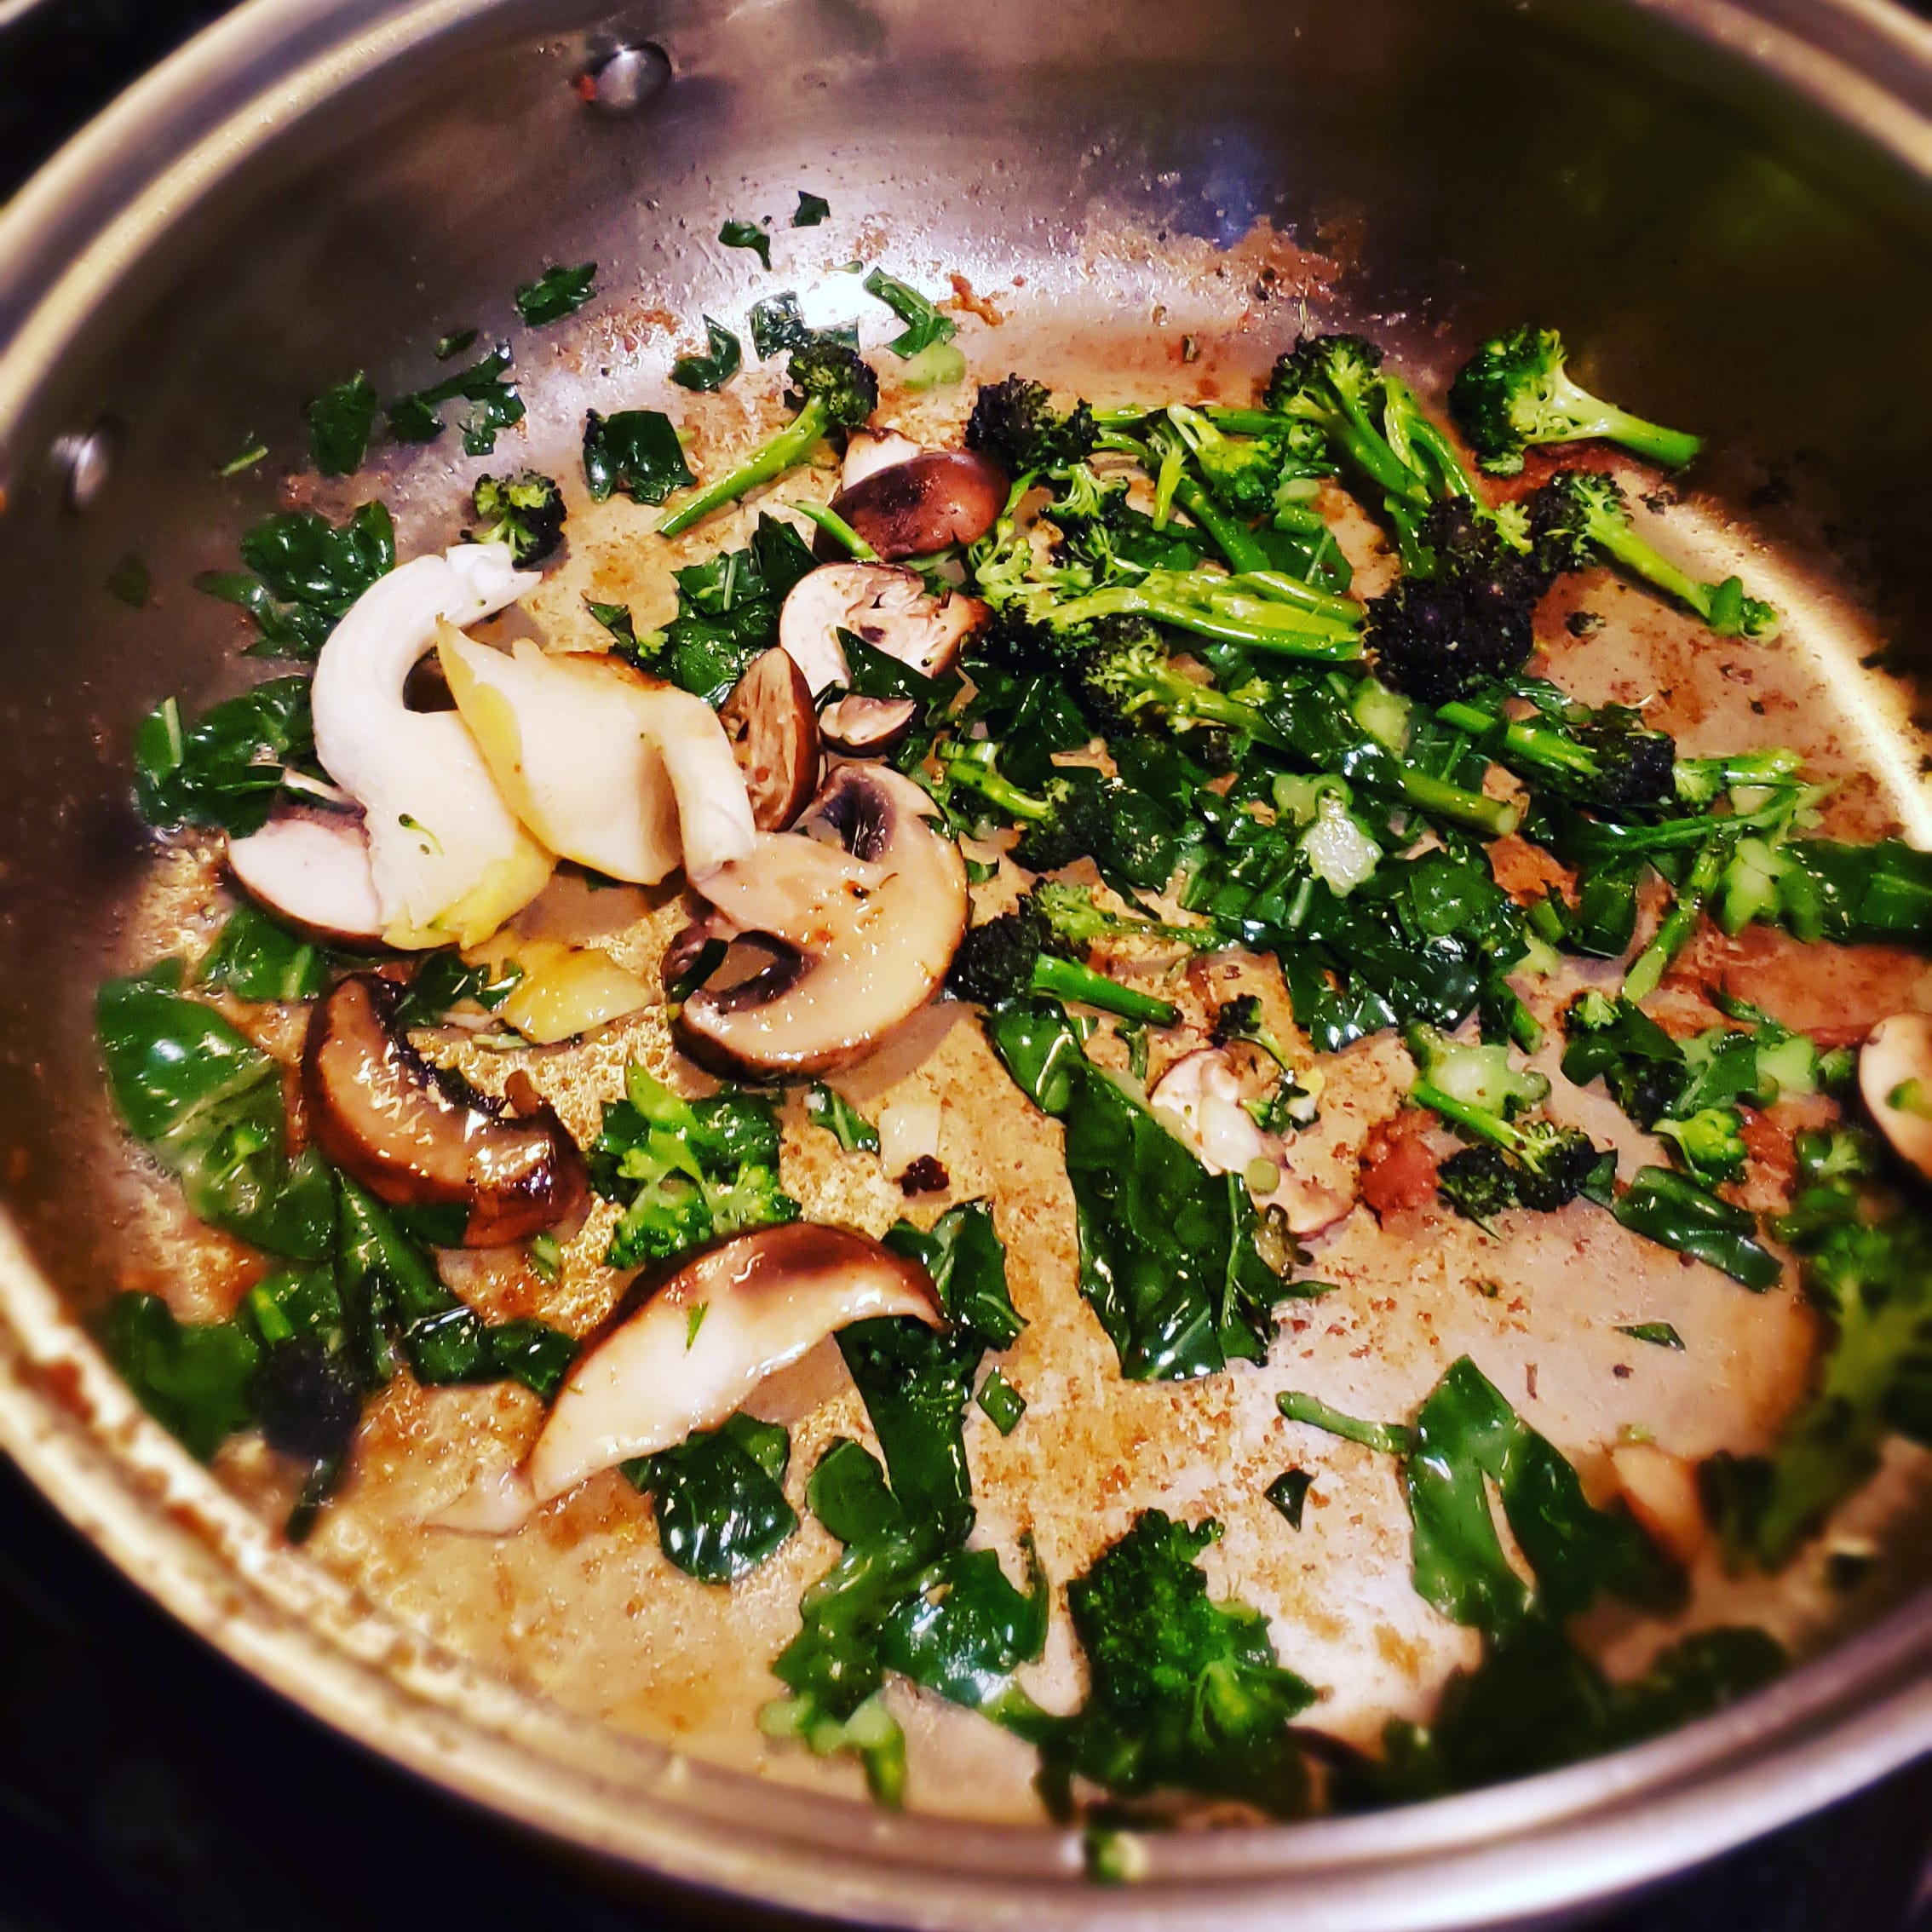 Mushroom kale broccoli breakfast side dish. Anti-inflammatory and immunity boosting.